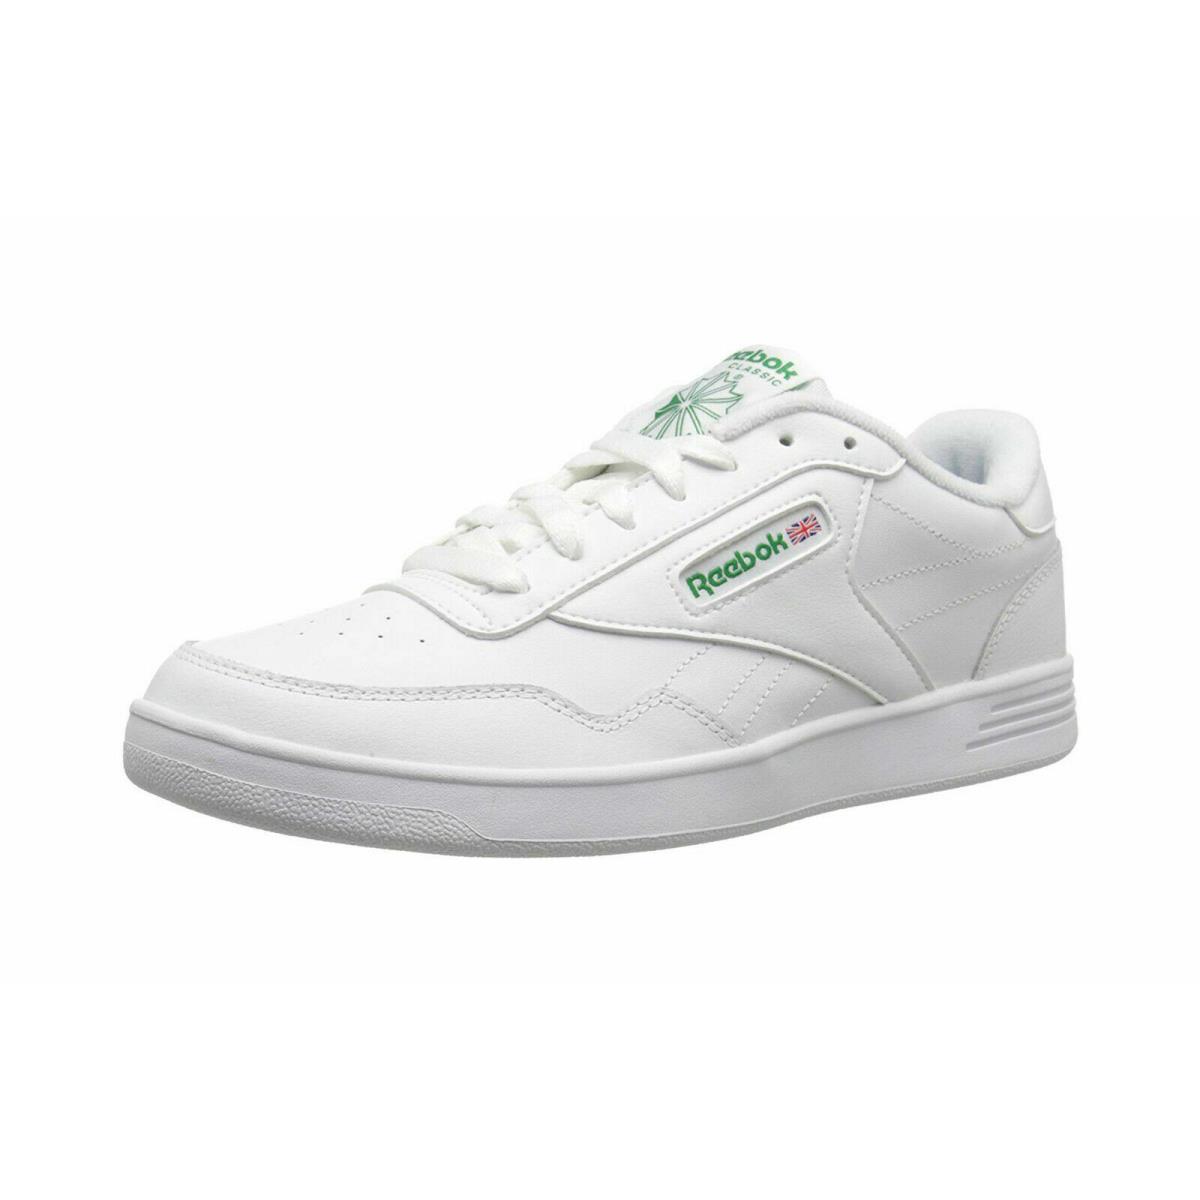 Reebok Club Memt White Green Memory Foam Men Tennis Shoes Synthetic Leather